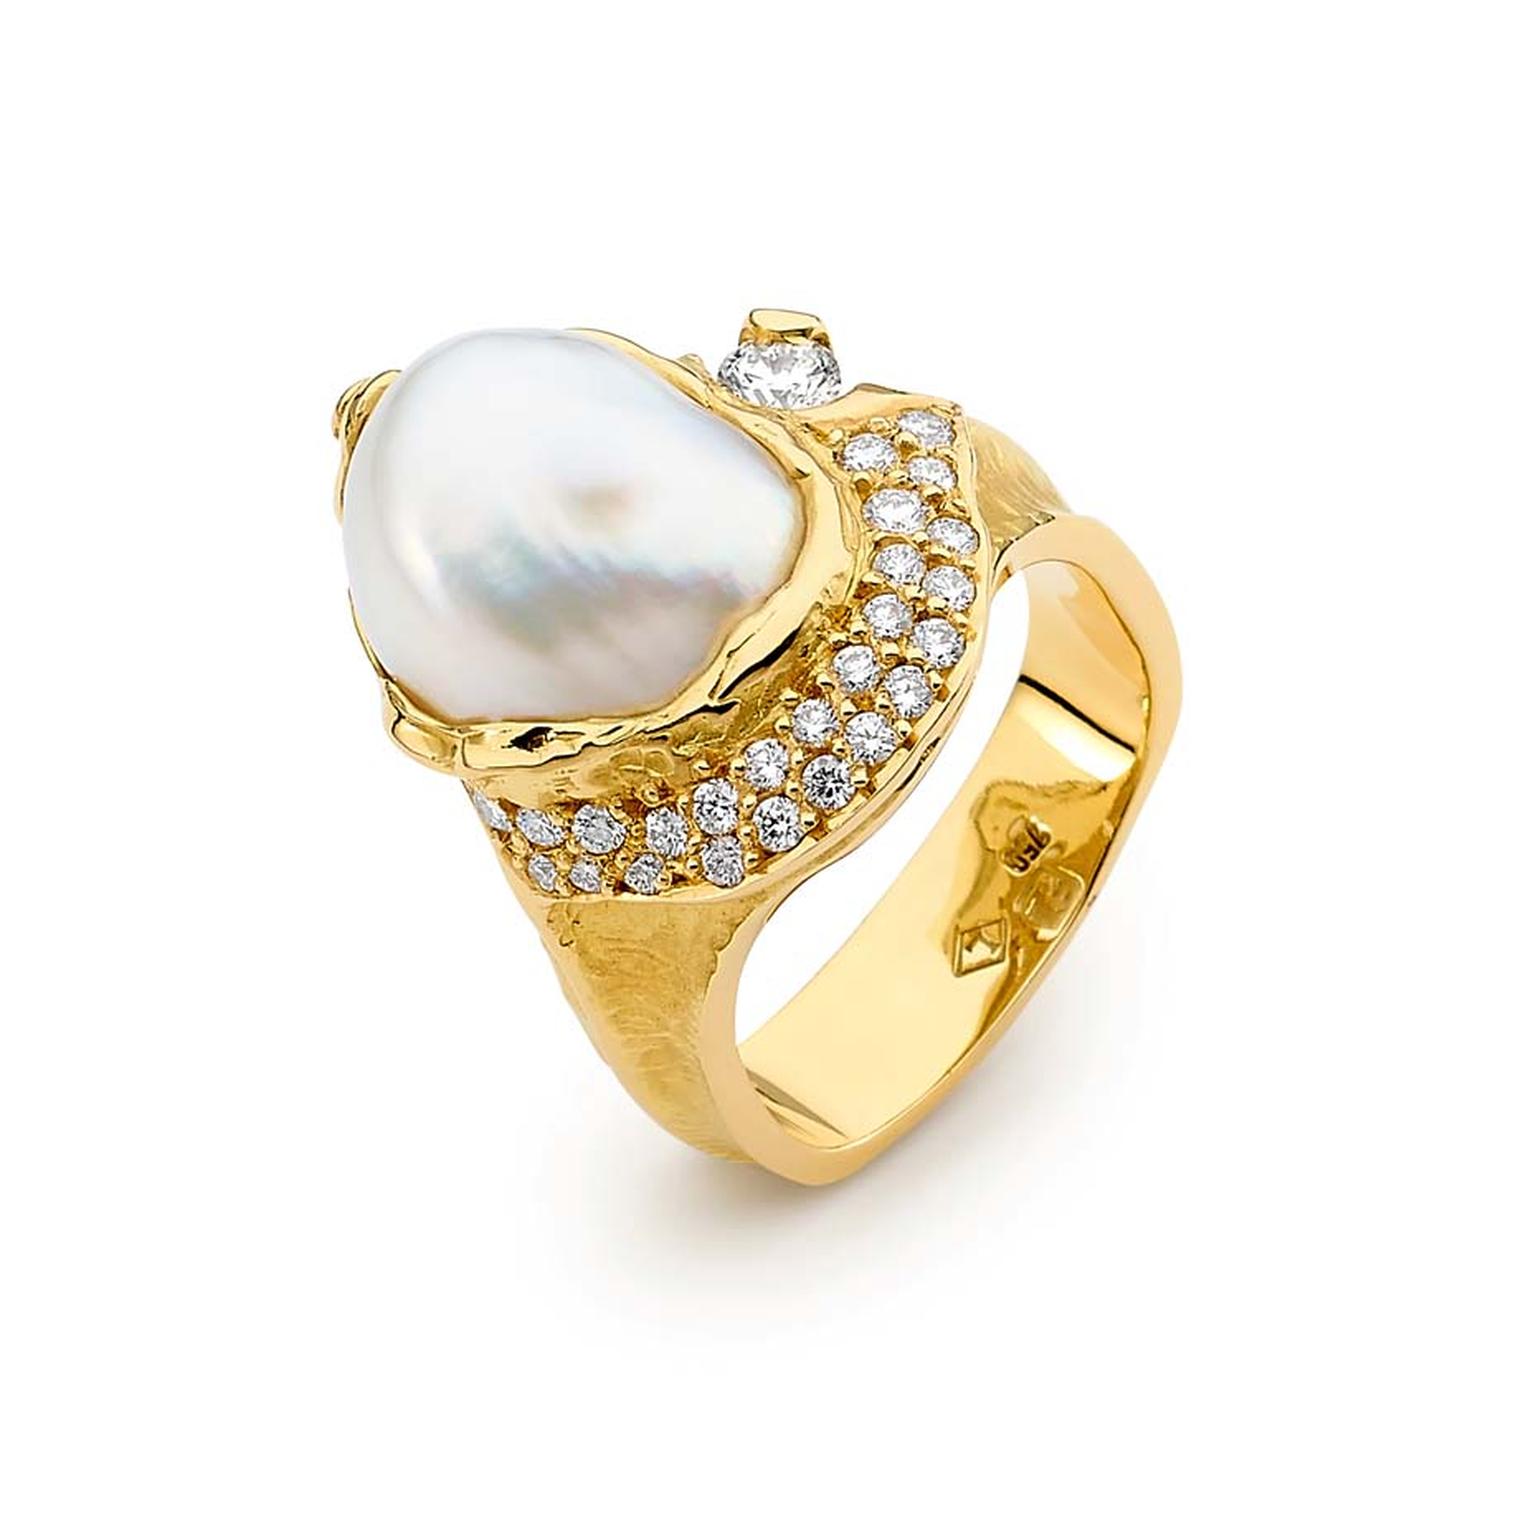 Australian Pearls_Linneys_18ct yellow gold Australian South Sea seedless pearl and diamond ring 7,900.jpg